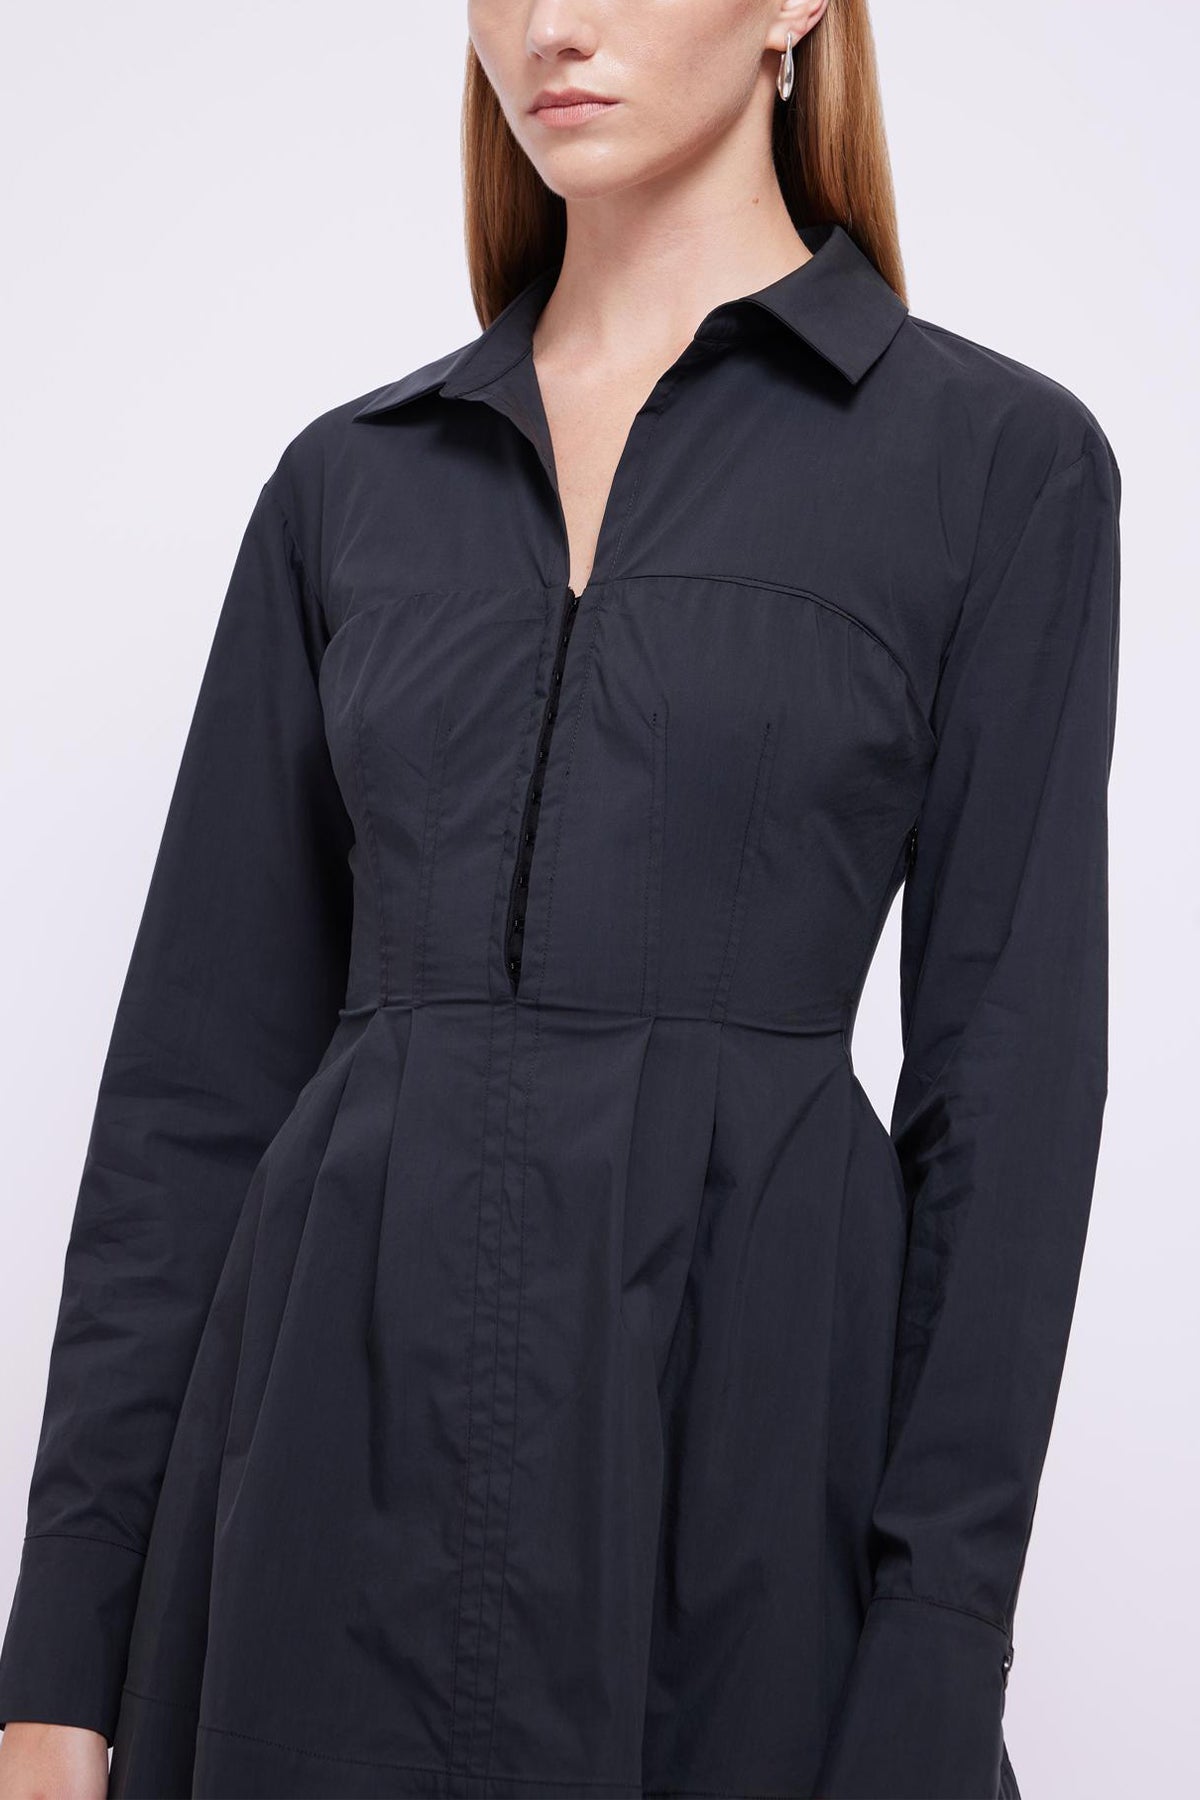 Carolyn Long Sleeve Bustier Mini Dress in Black - shop-olivia.com